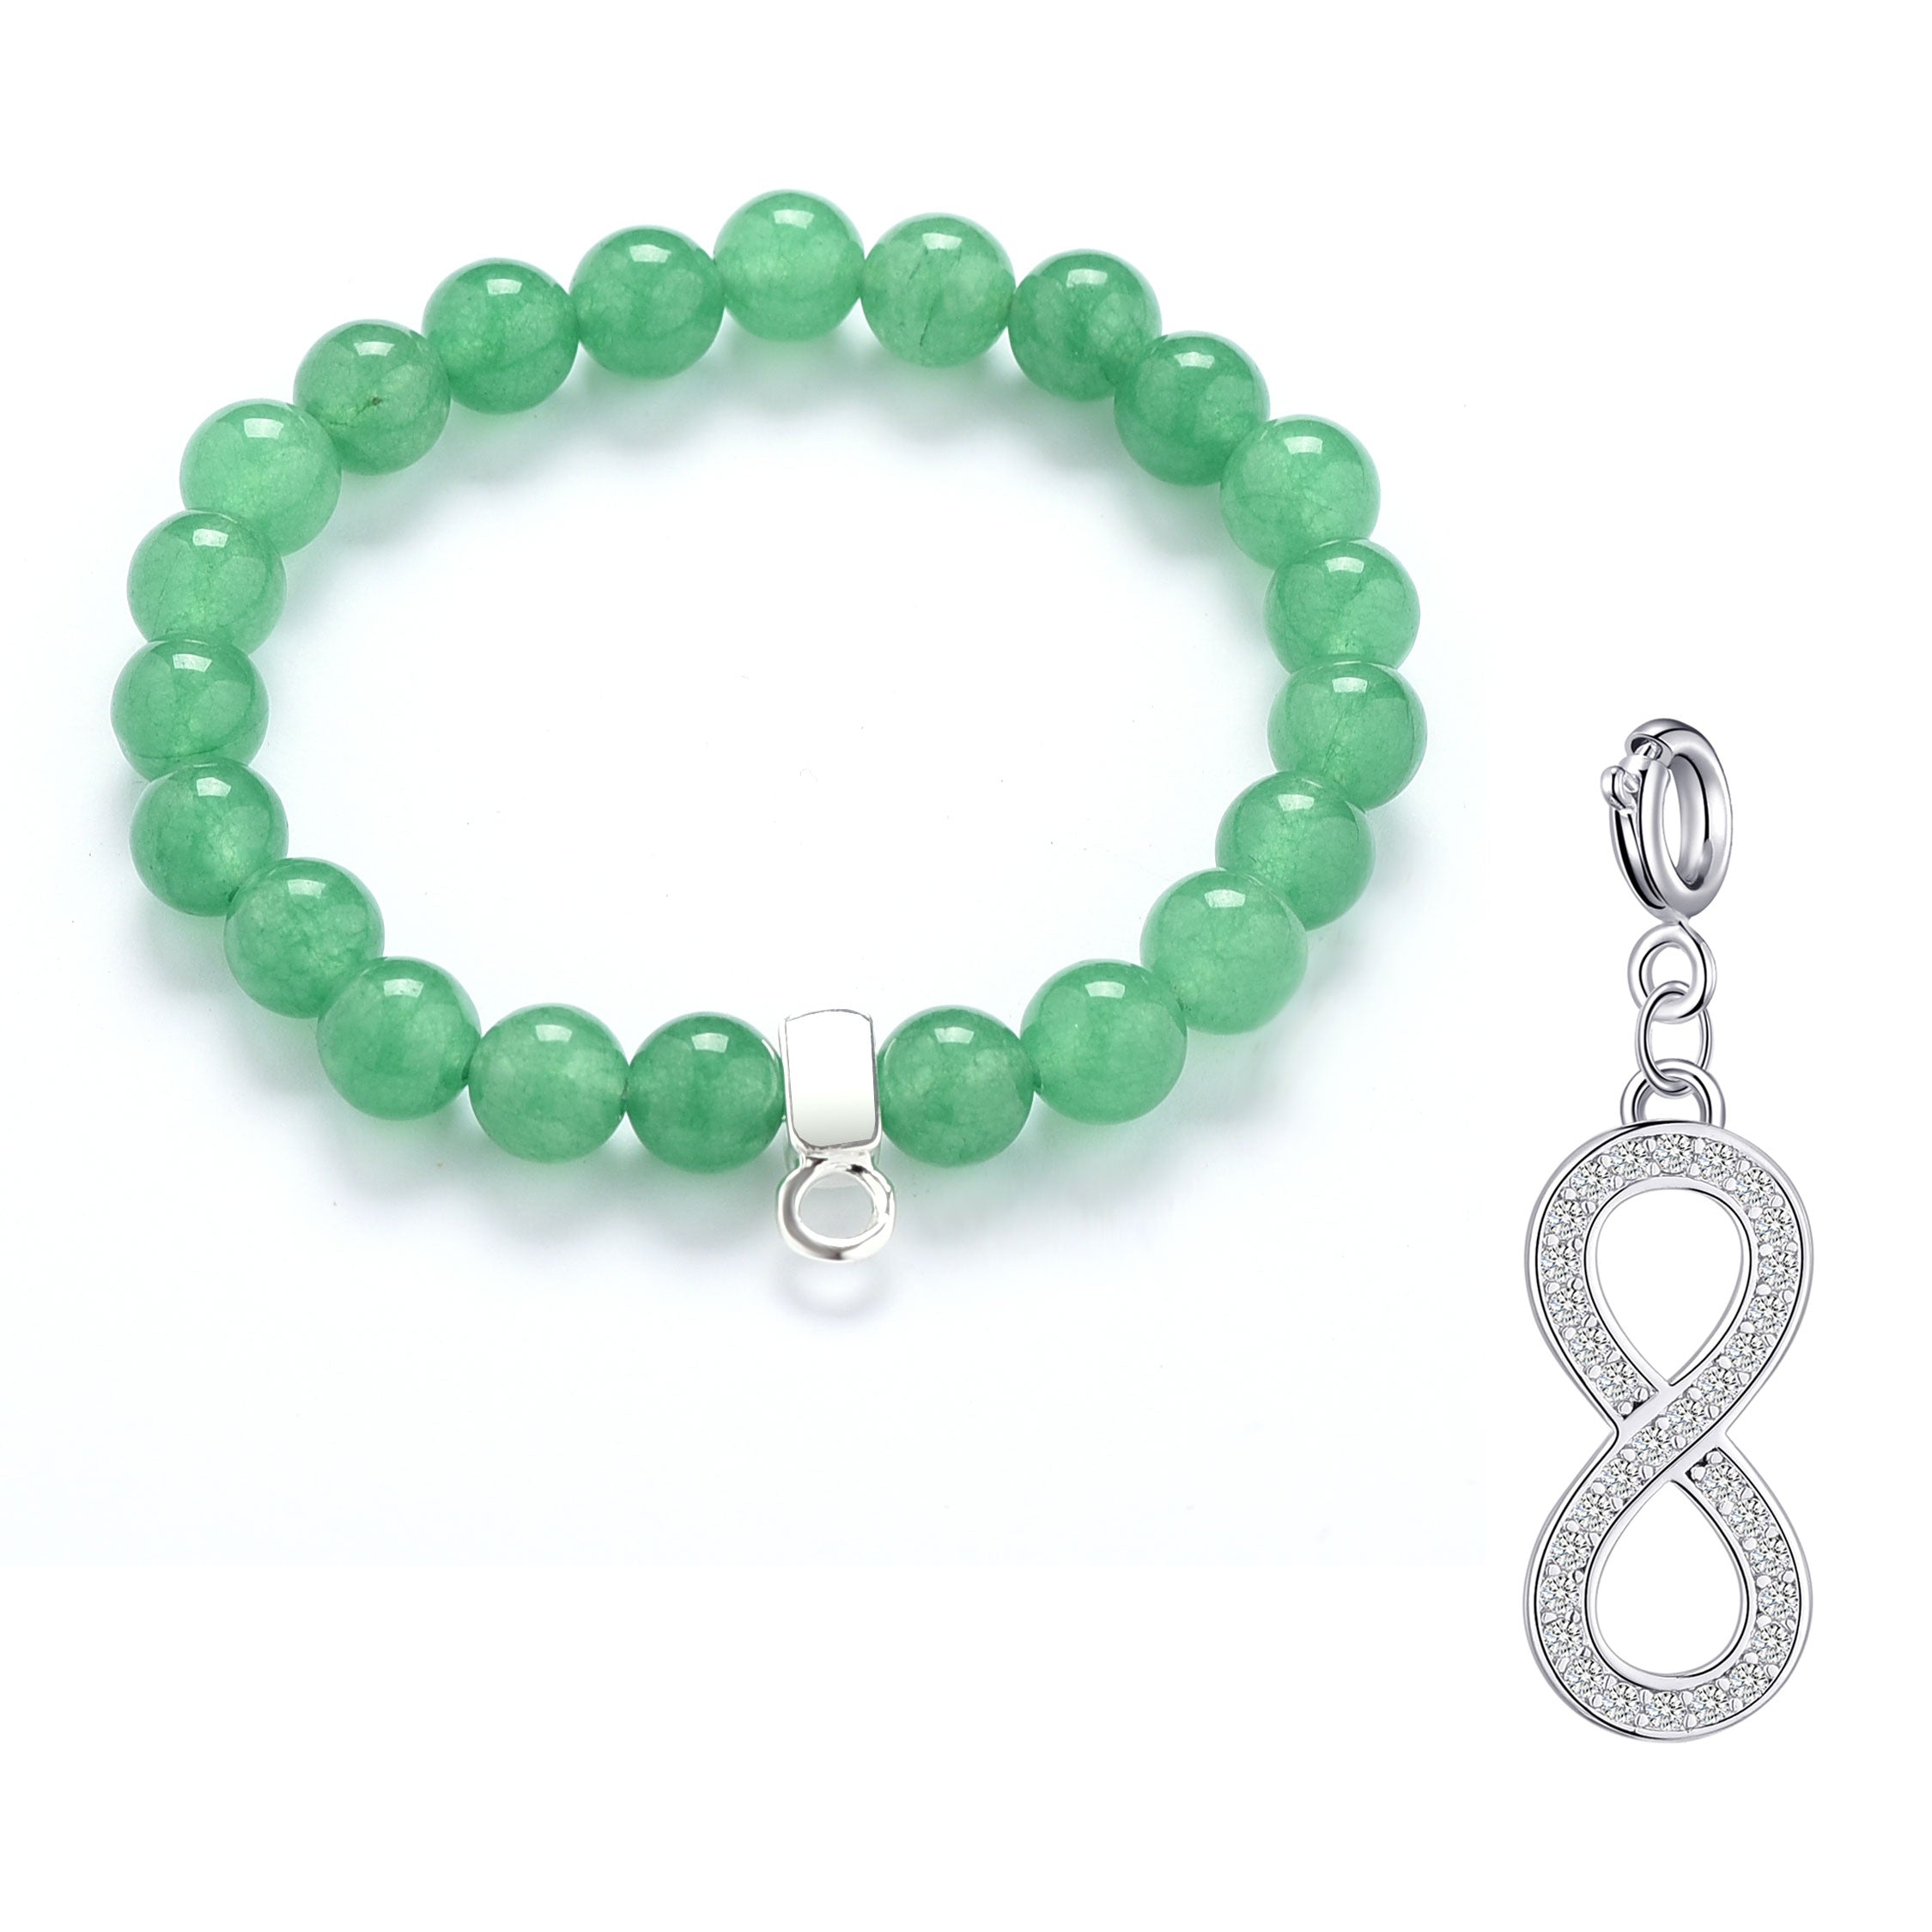 Green Aventurine Gemstone Stretch Bracelet with Charm Created with Zircondia® Crystals